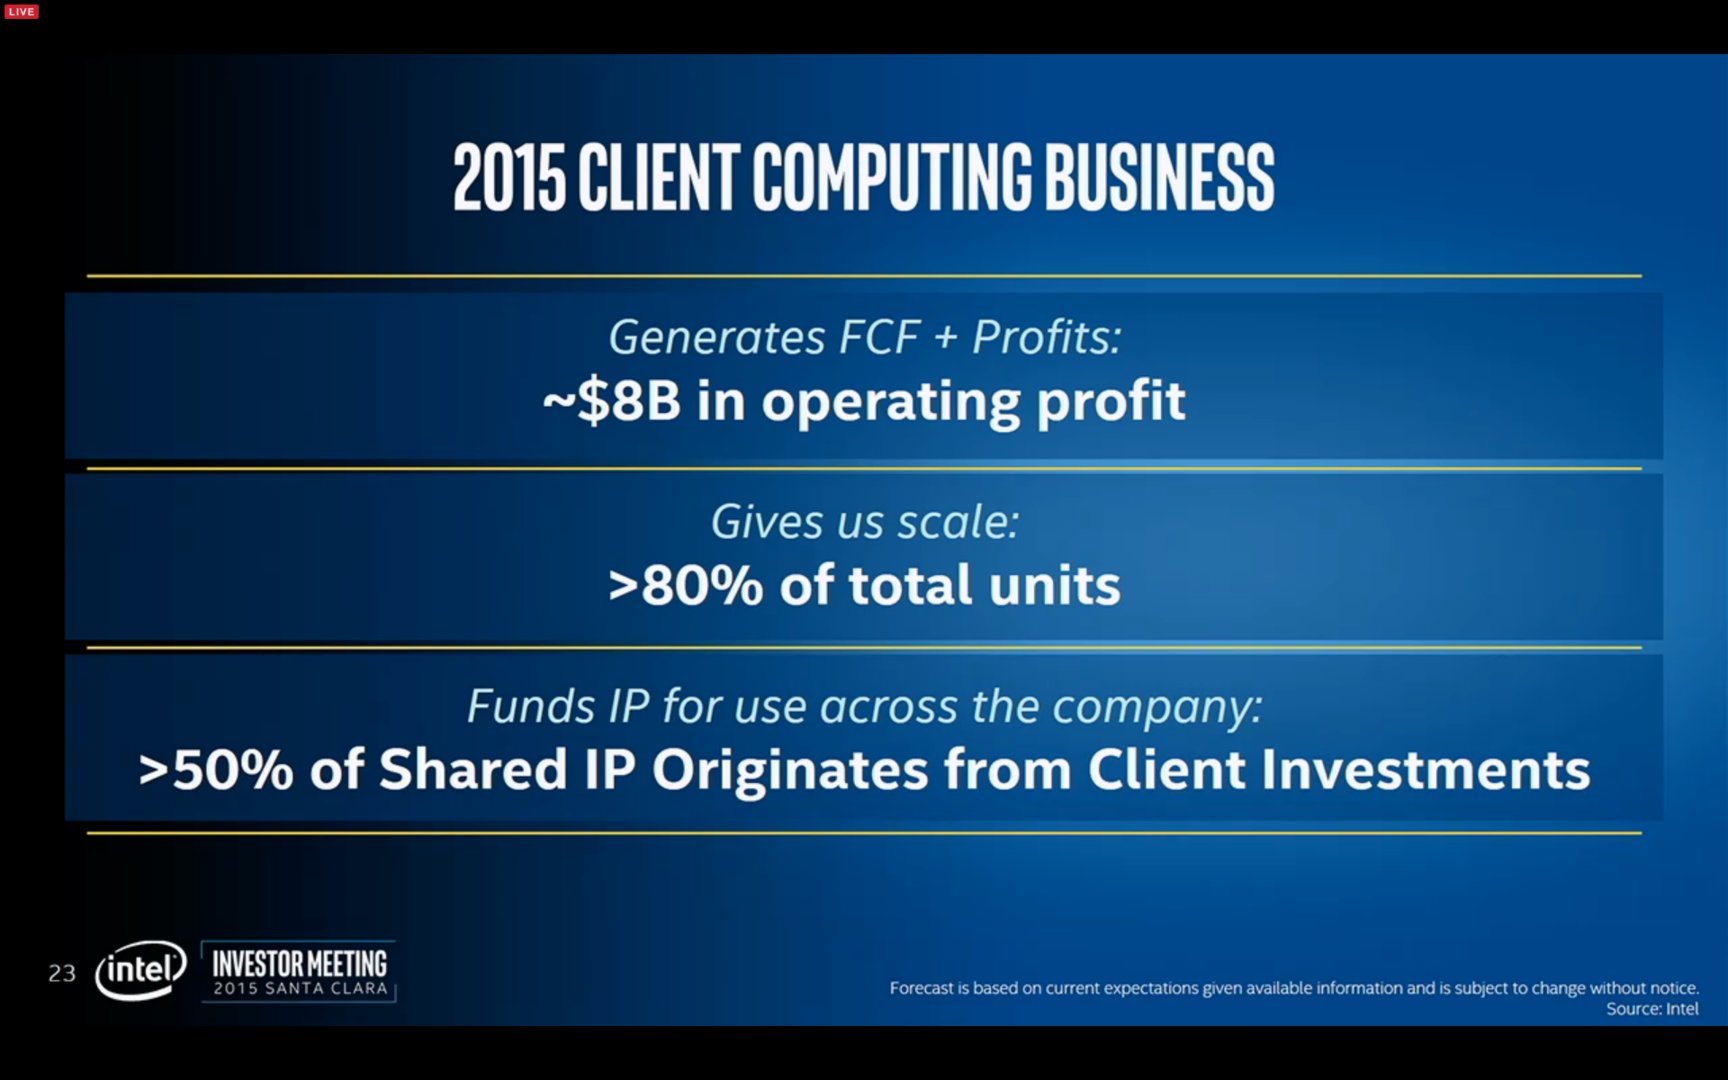 Intel Investor Meeting 2015